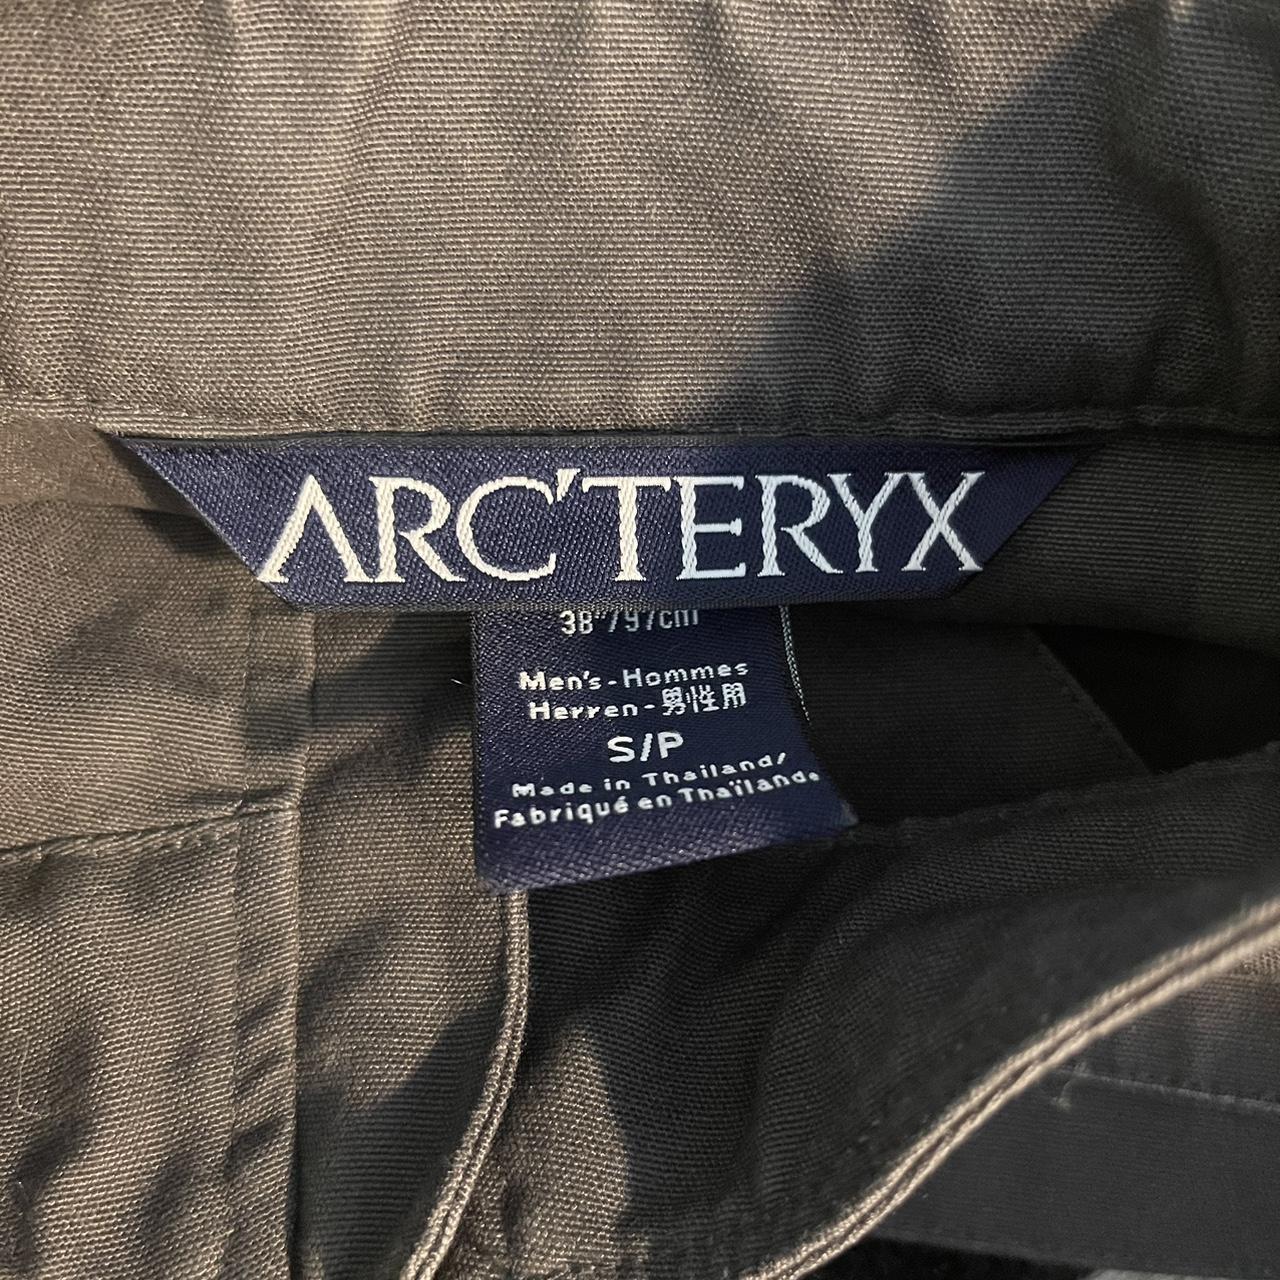 Vintage arc’teryx Work jacket tagged small t2b:... - Depop